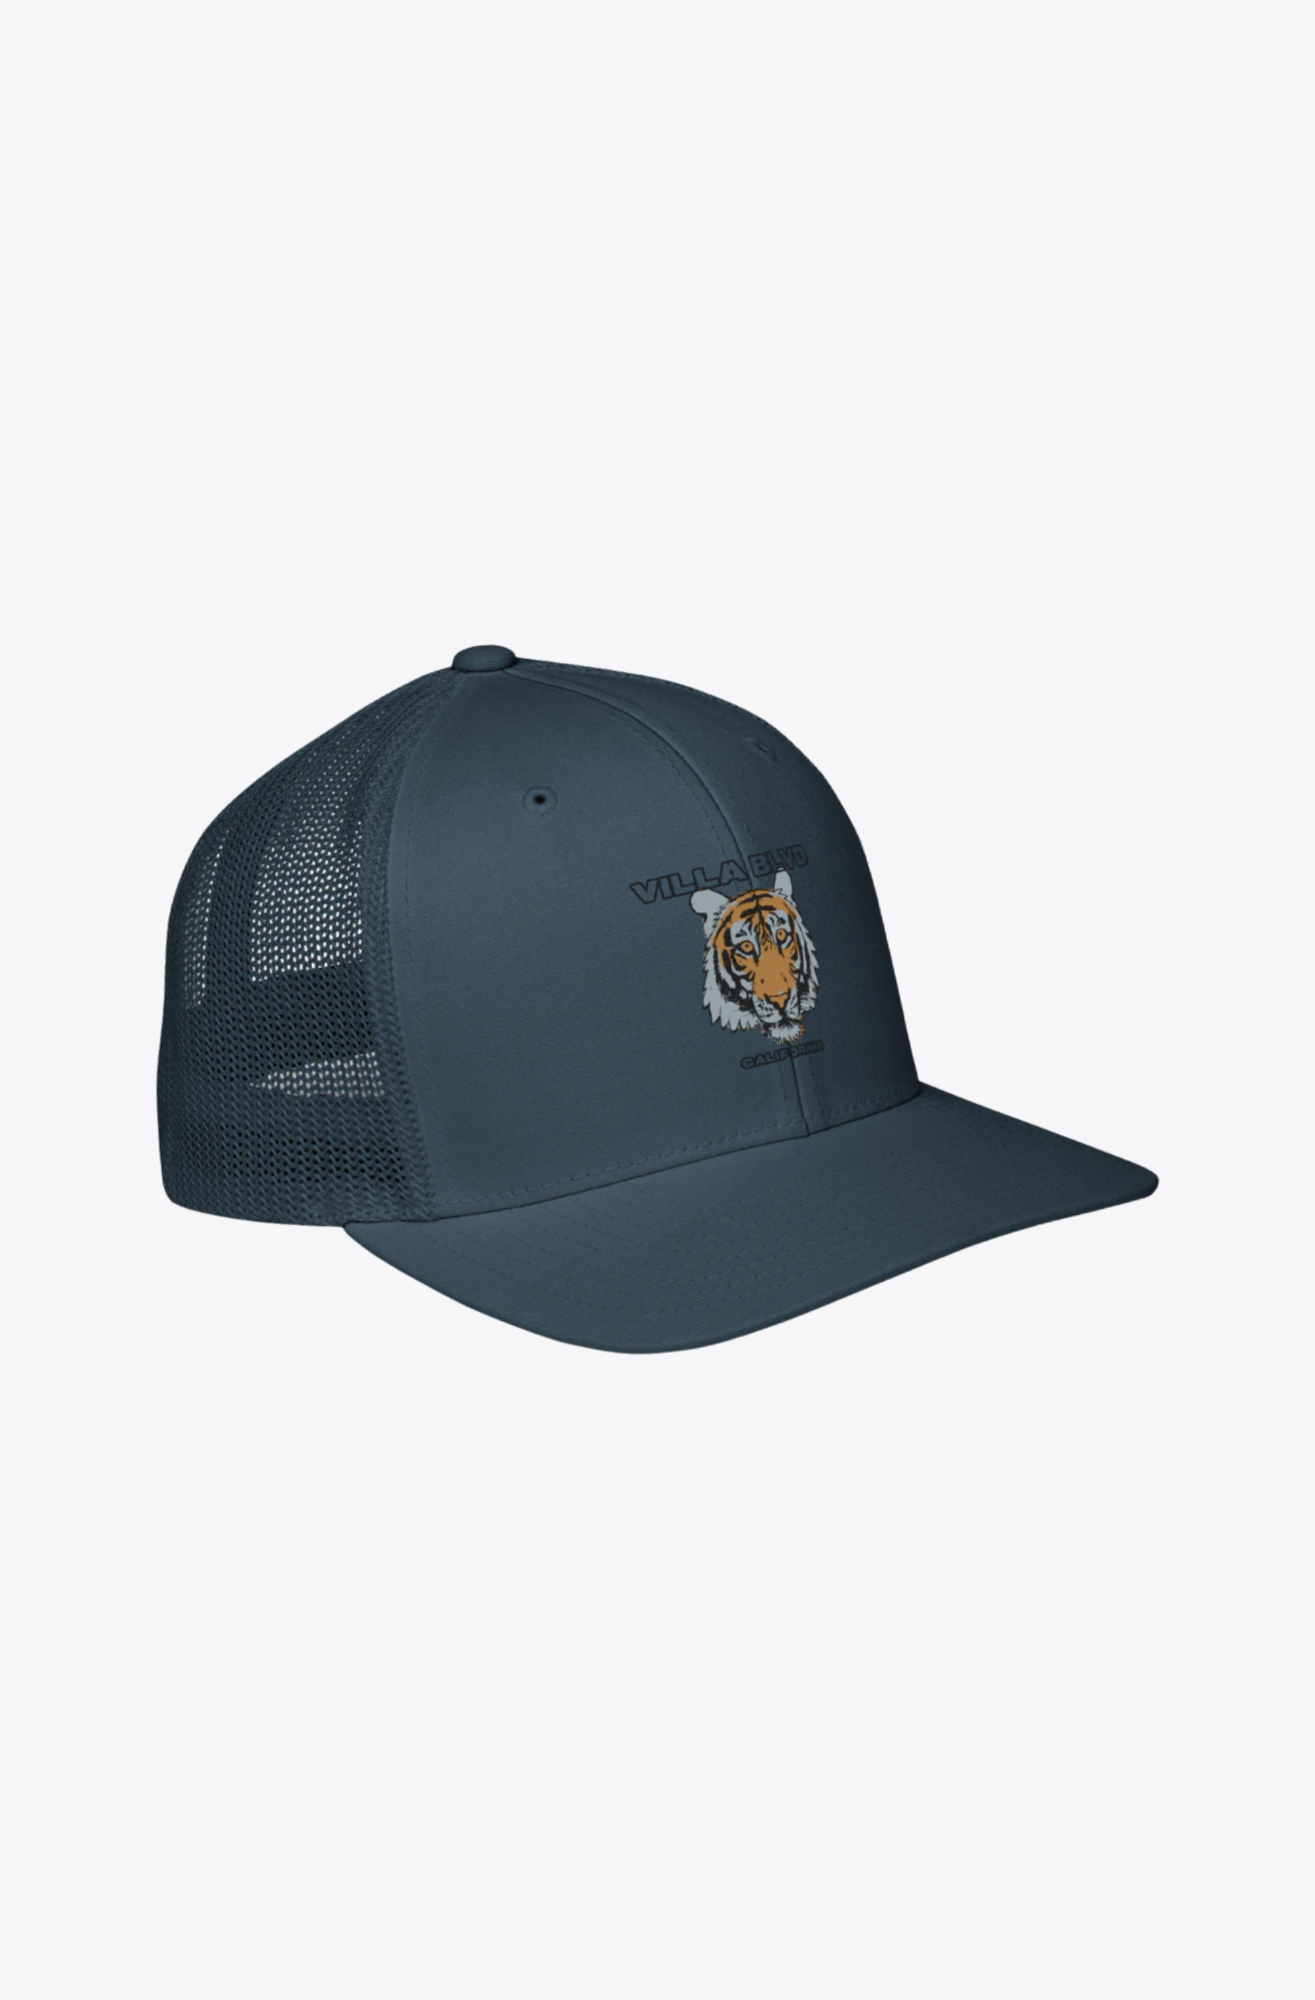 Villa Blvd Sauvage Trucker Hat ☛ Multiple Colors Available ☚